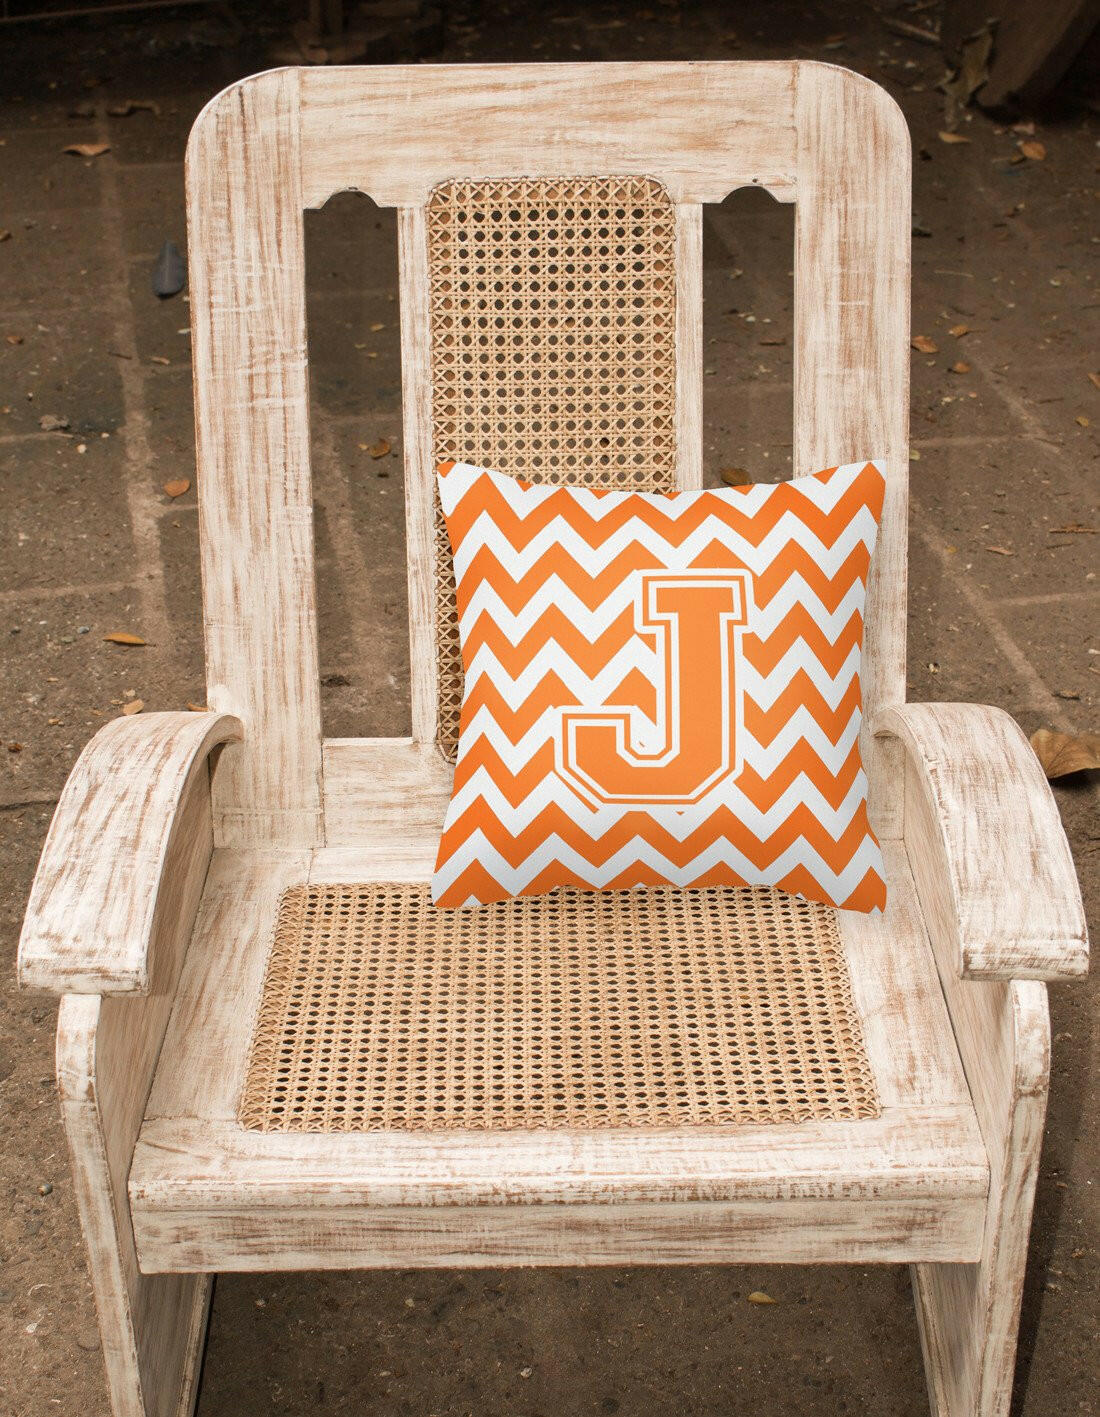 Letter J Chevron Orange and White Fabric Decorative Pillow CJ1046-JPW1414 by Caroline's Treasures